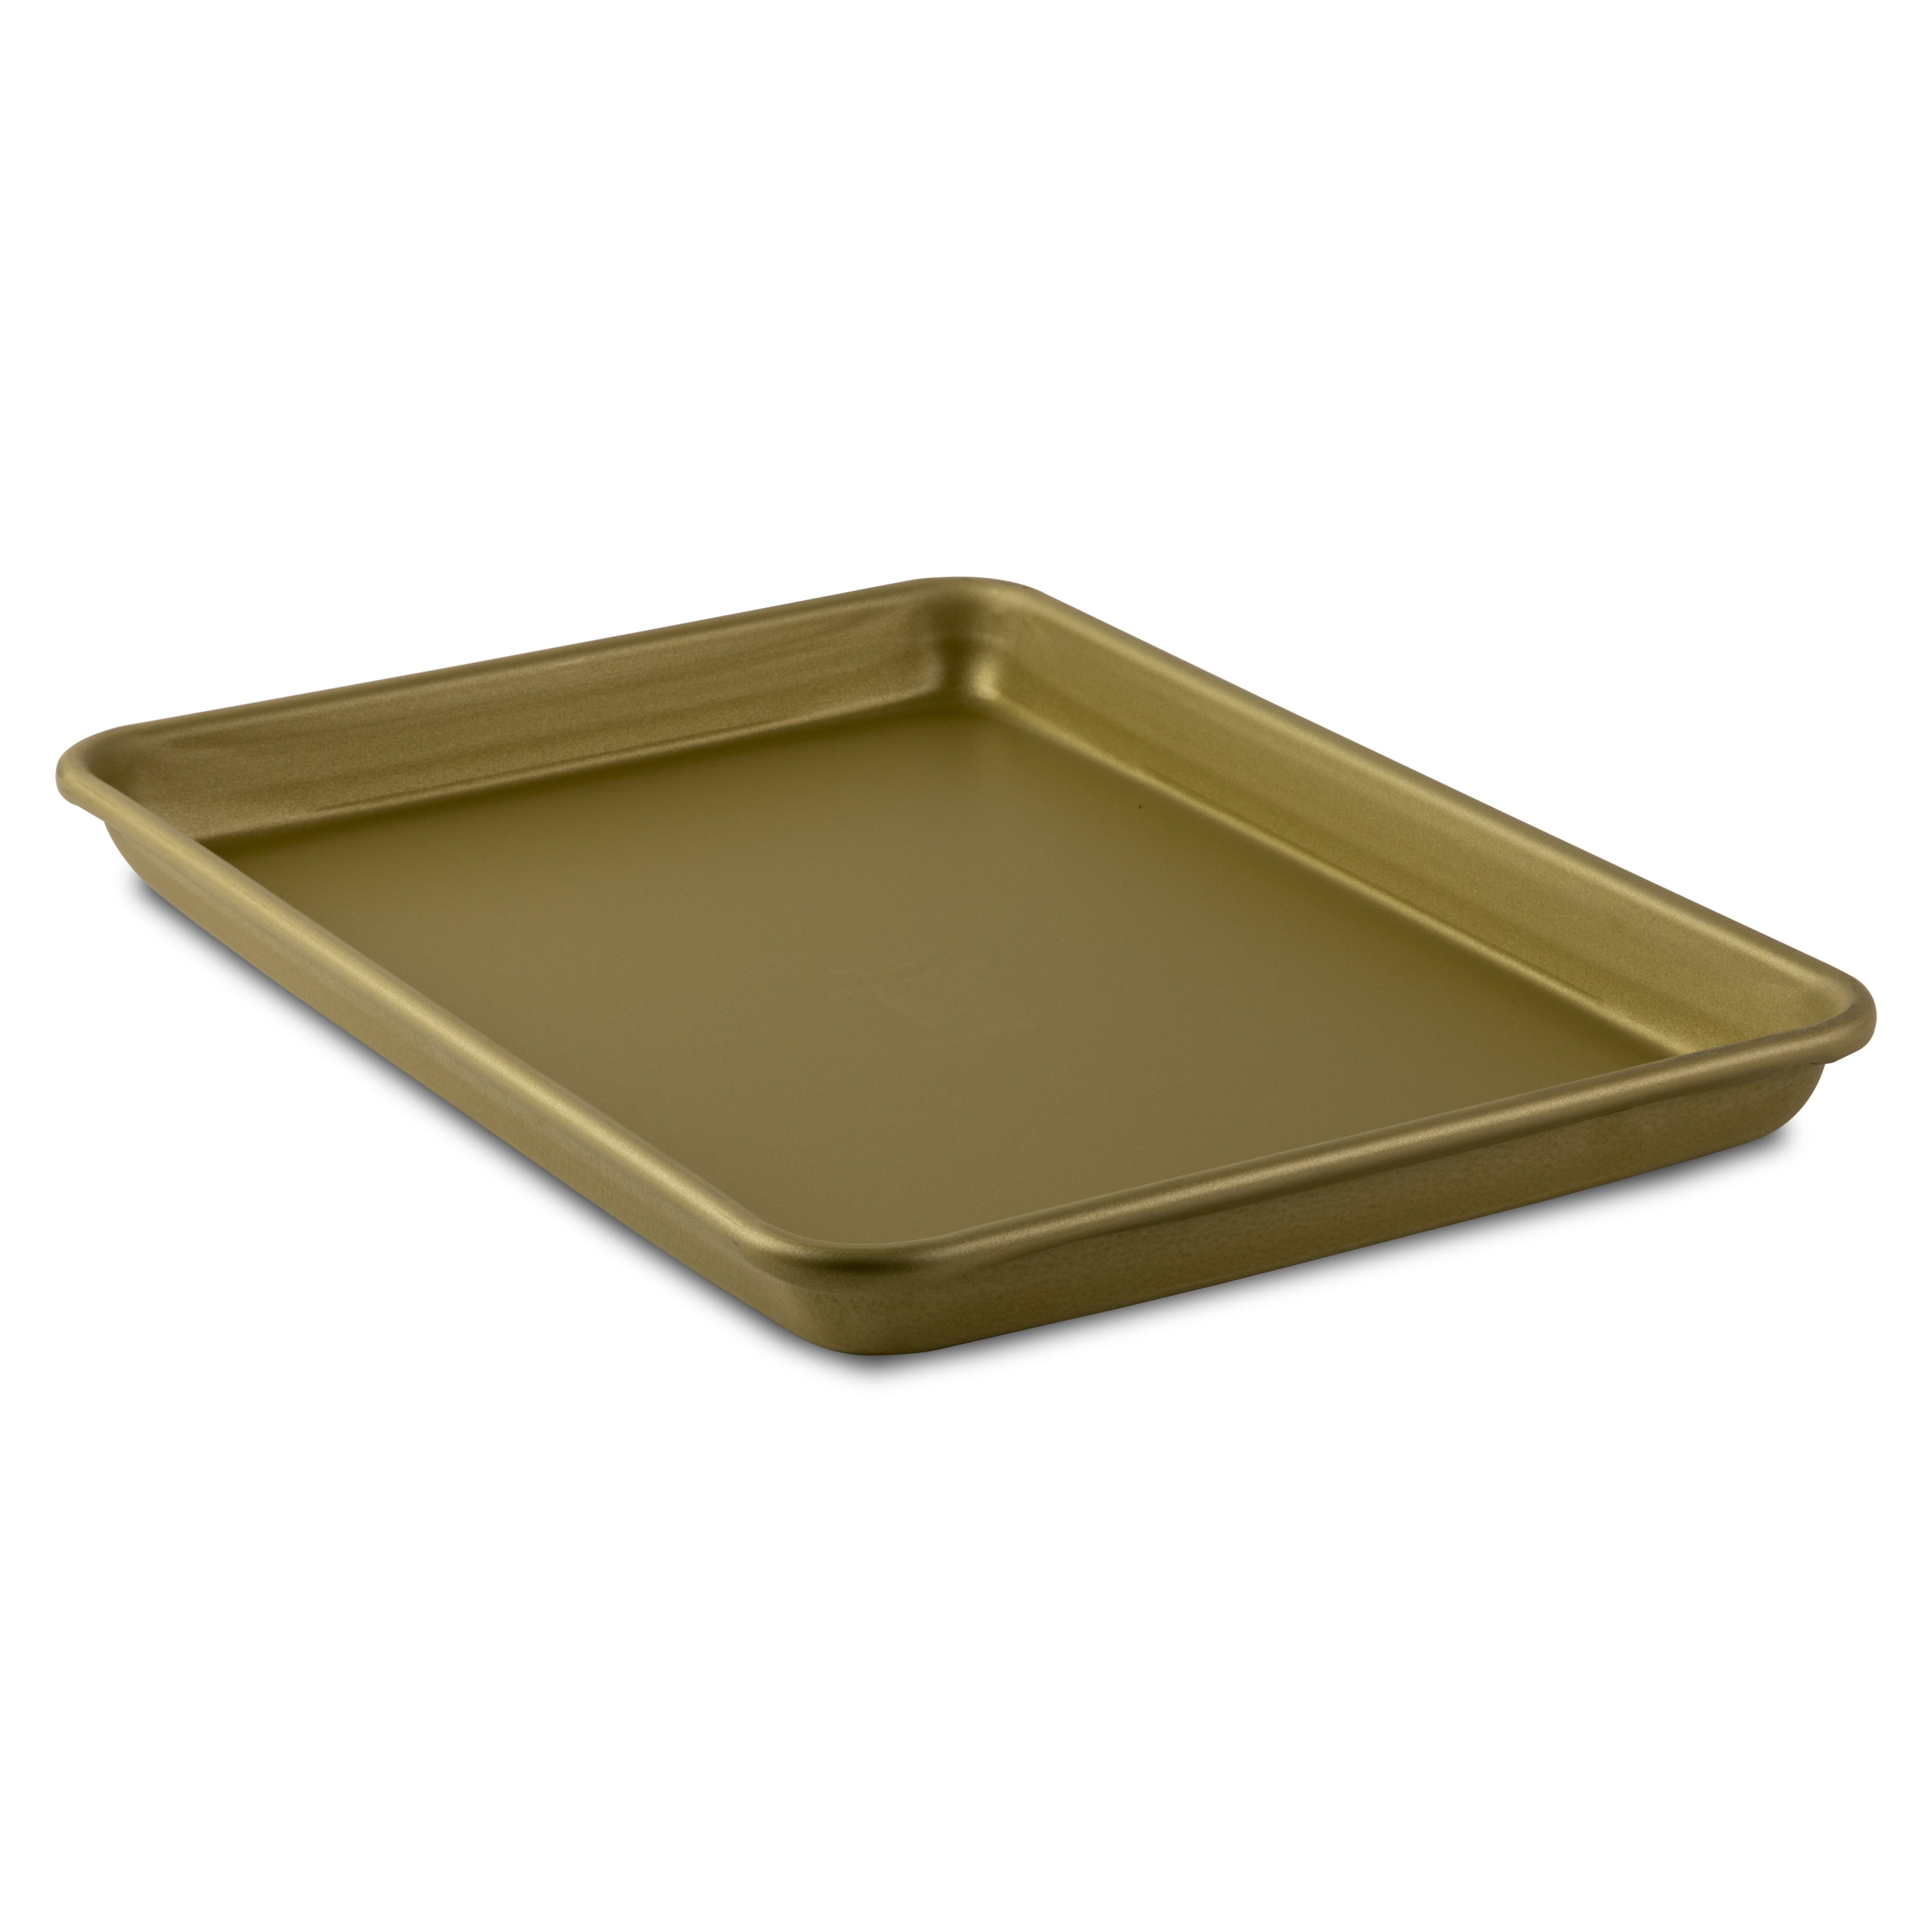 Small Plastic Sheet Pan Cover » NUCU® Cookware & Bakeware